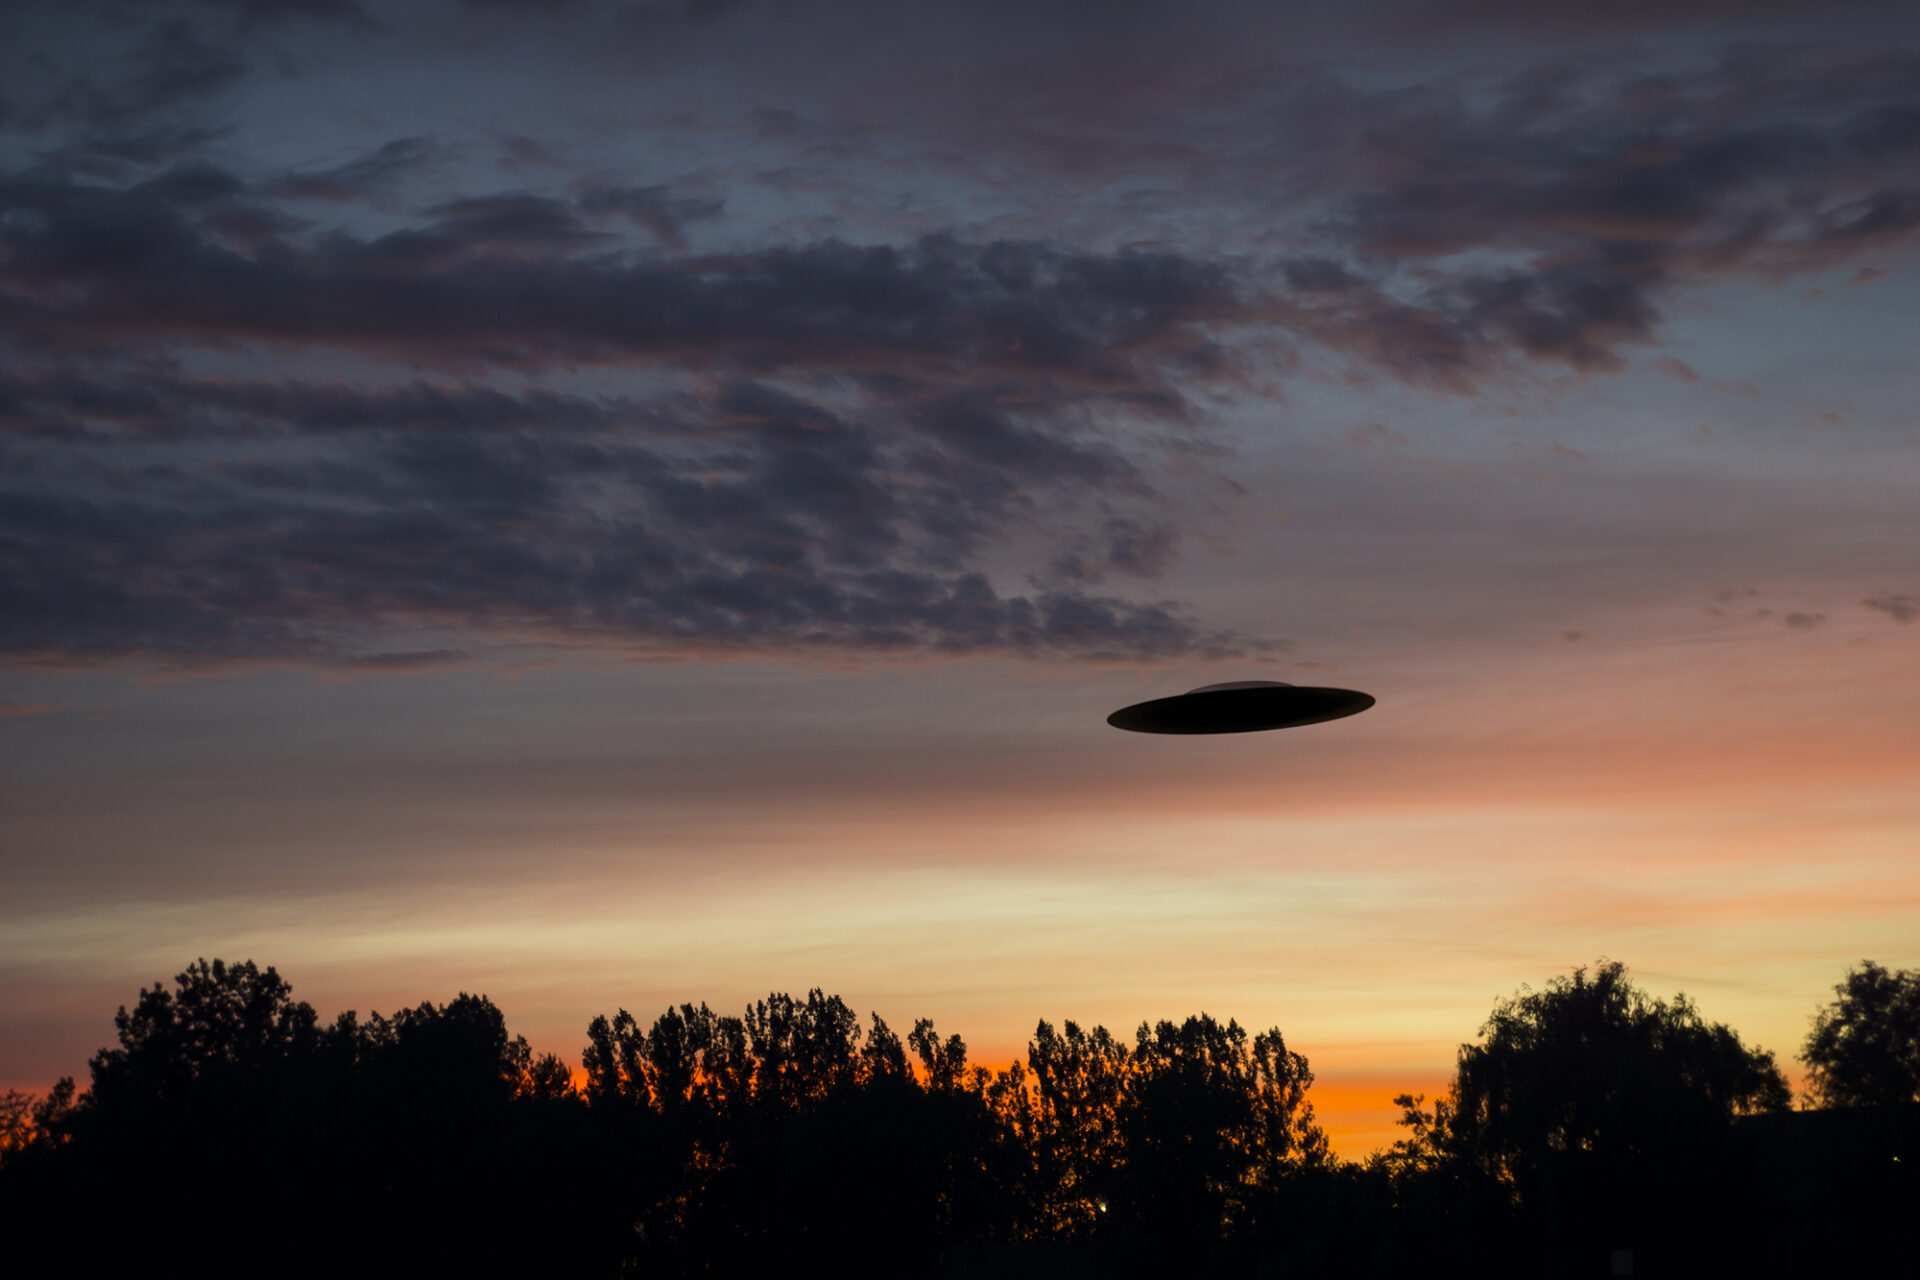 Humanoid UFO seen in California sky: Report